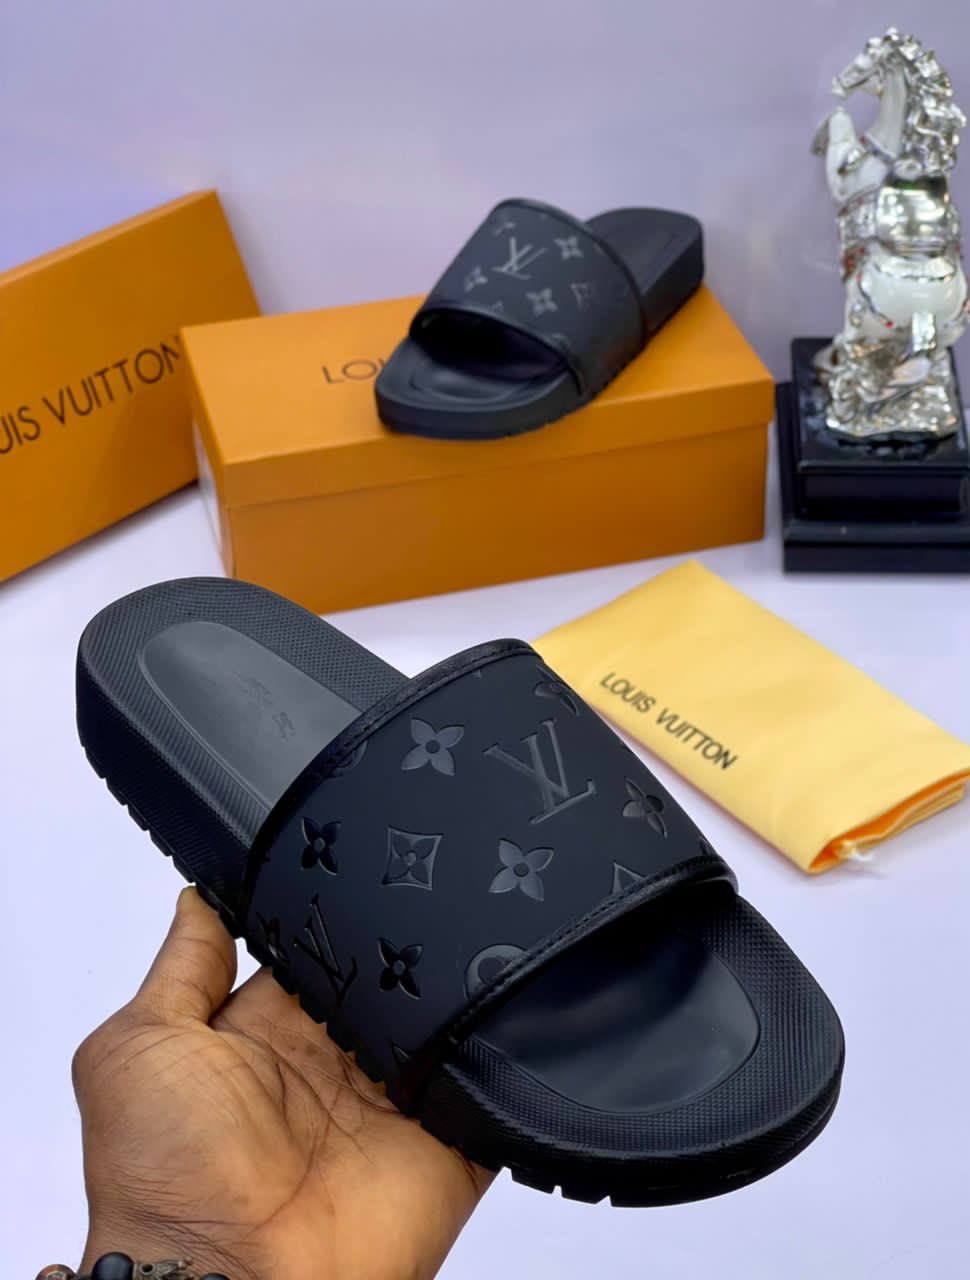 Louis Vuitton Slideshow on Style.com